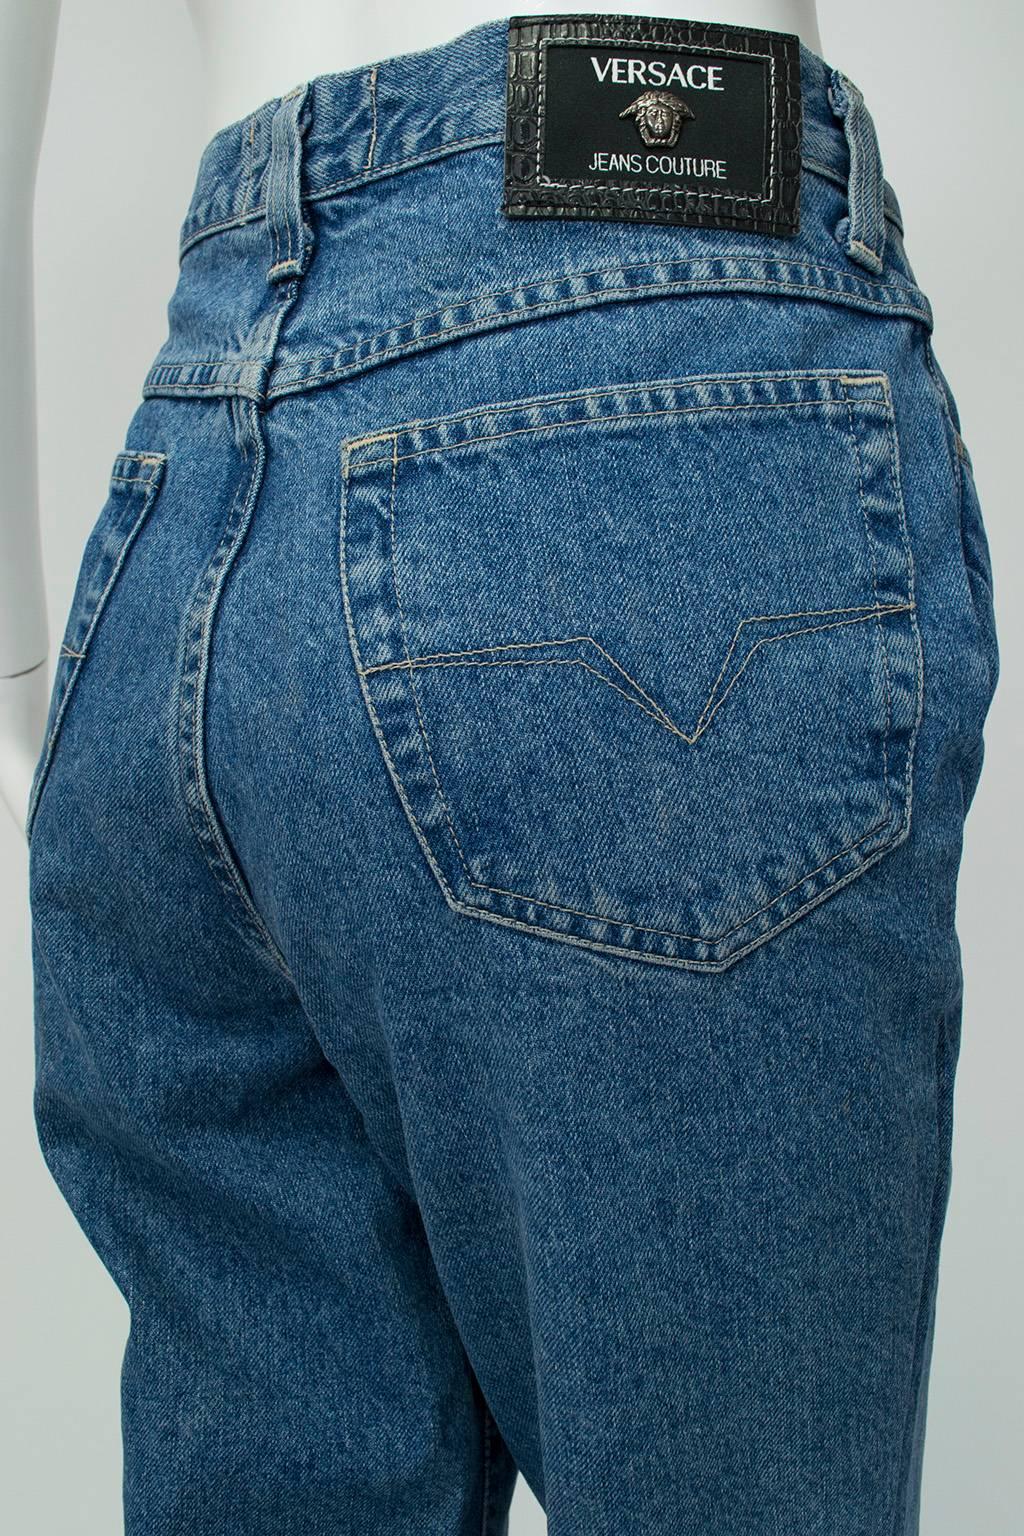 Blue Versace Straight Leg Raw Denim Jeans with Silver Medusa Rivets - It 46, 1999